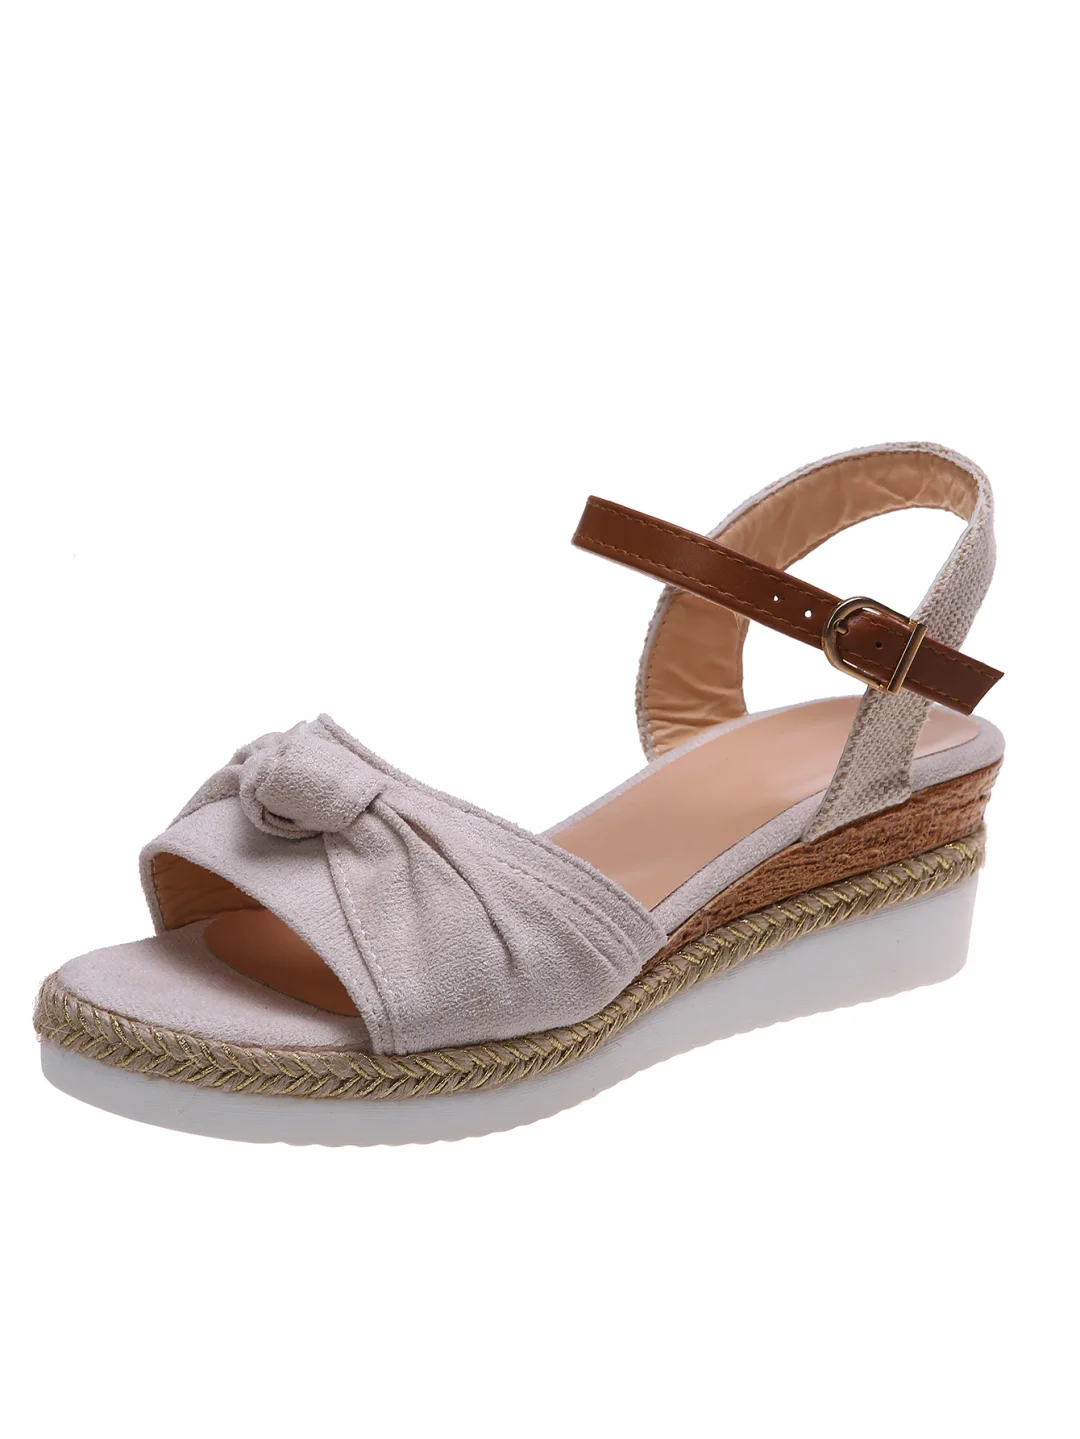 Breakj Platform Wedges Sandals For Women Roman Bow Knot Fashion Retro Comfy Casual Shoes Woman 2022 Open Toe Summer Hot Sale